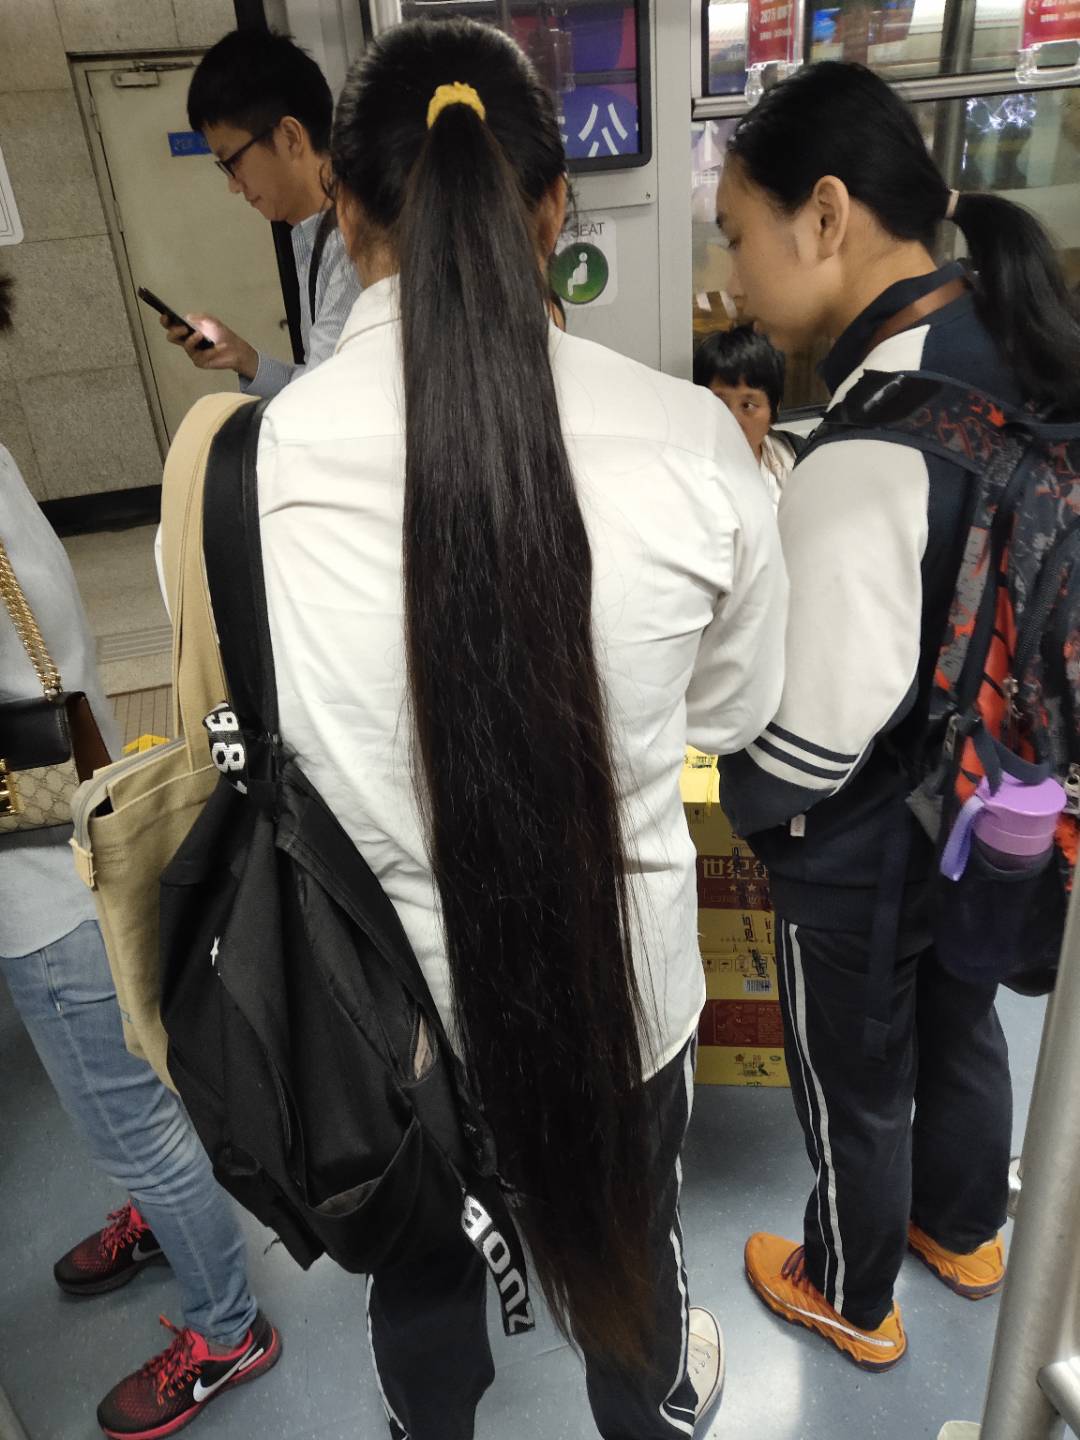 Streetshot of super long ponytail in subway